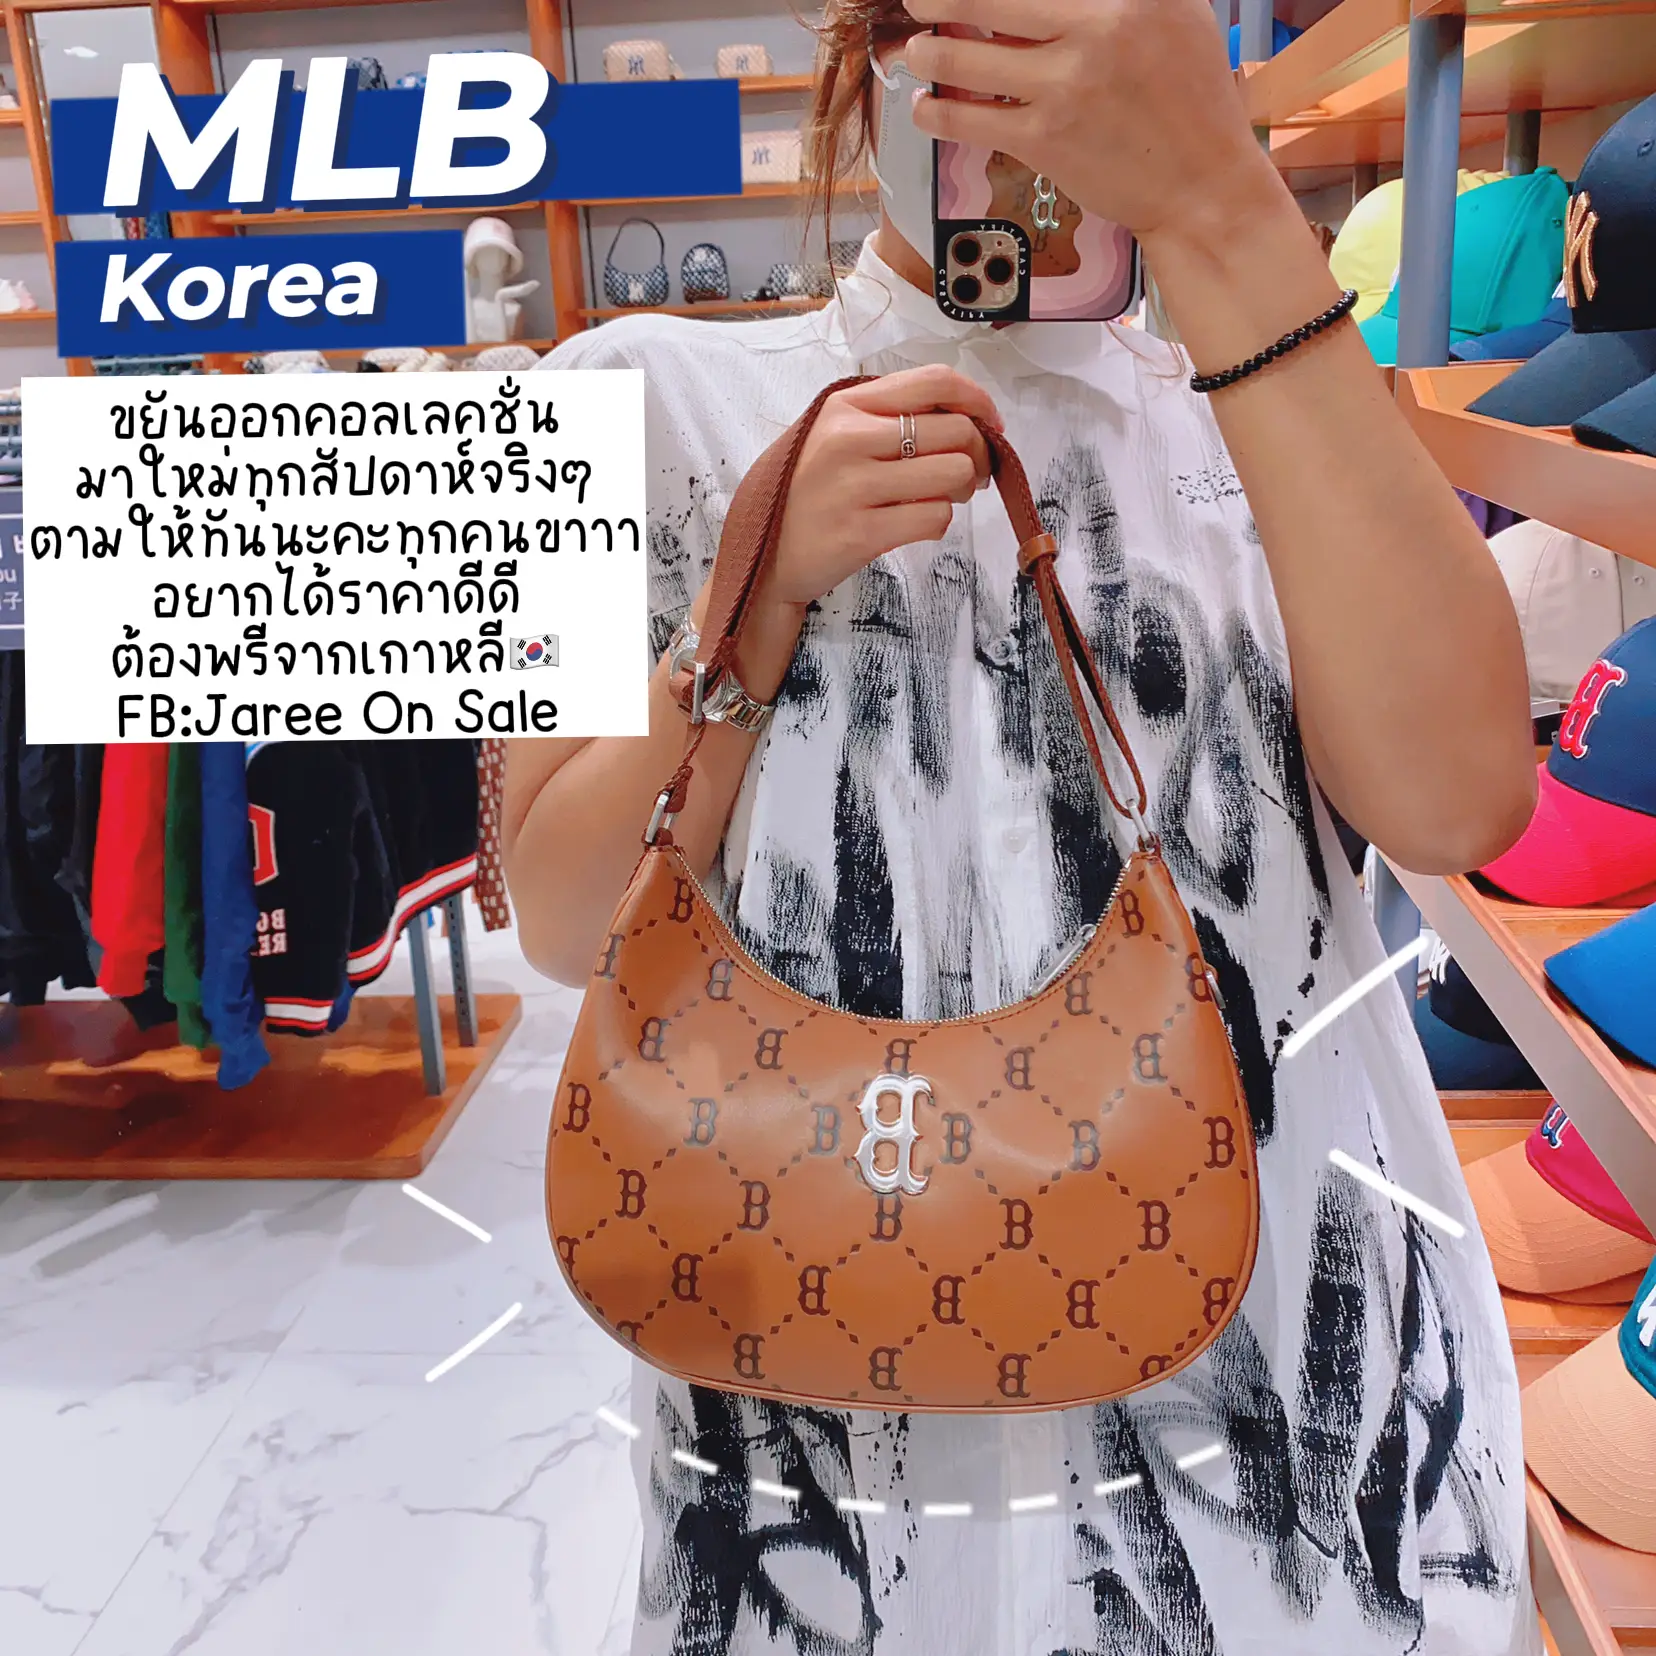 Look: South Korean Streetwear Brand MLB Is Now in Singapore